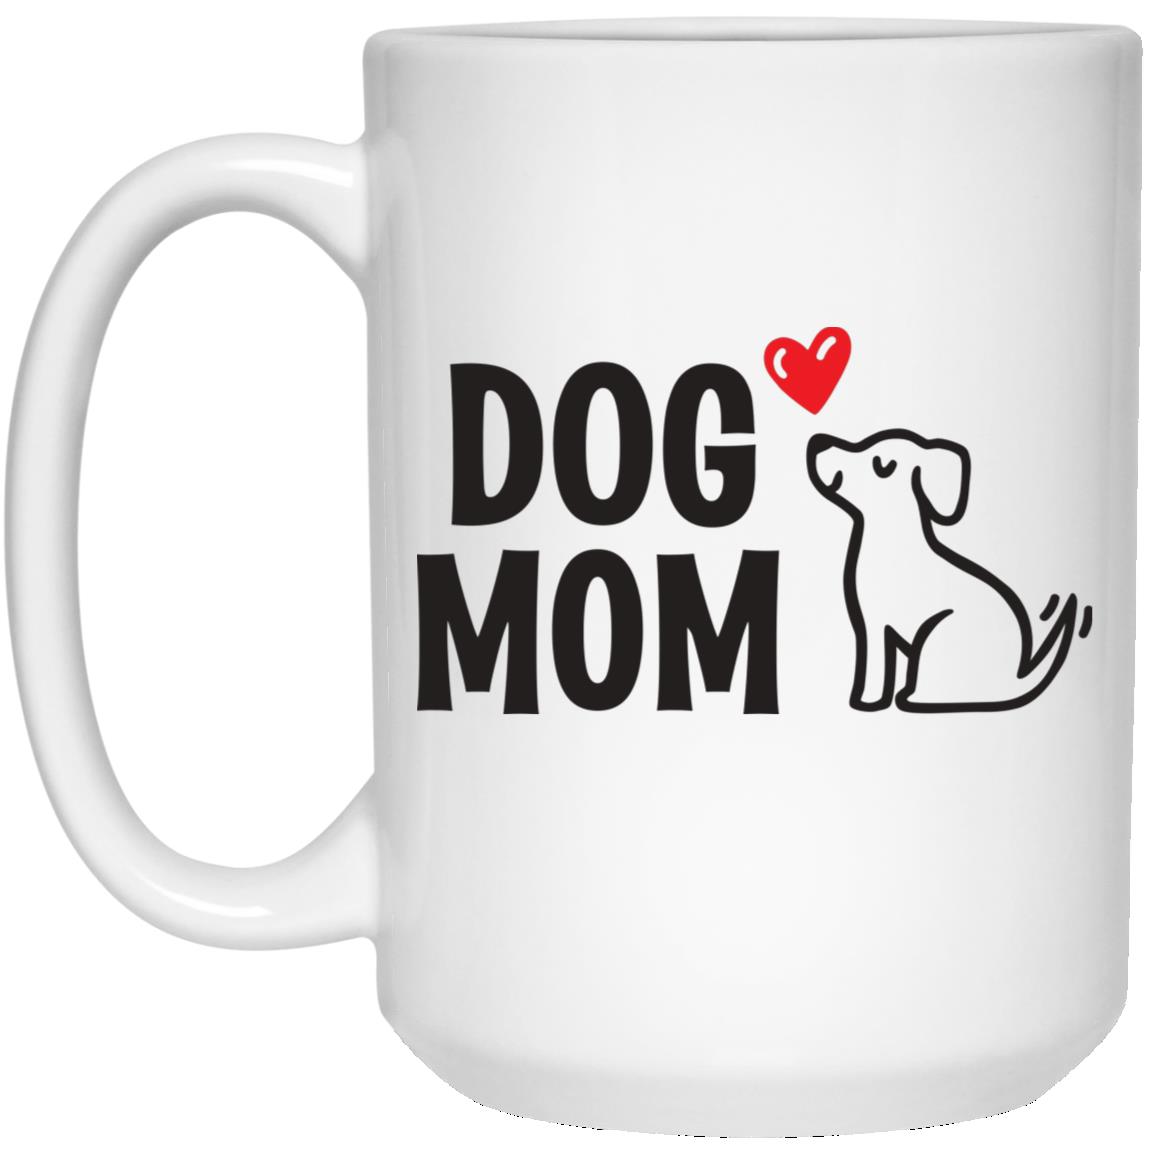 Dog Mom " I  Really Love This Pup" ❤️ 15 oz. Mug- Super Deal $7.99